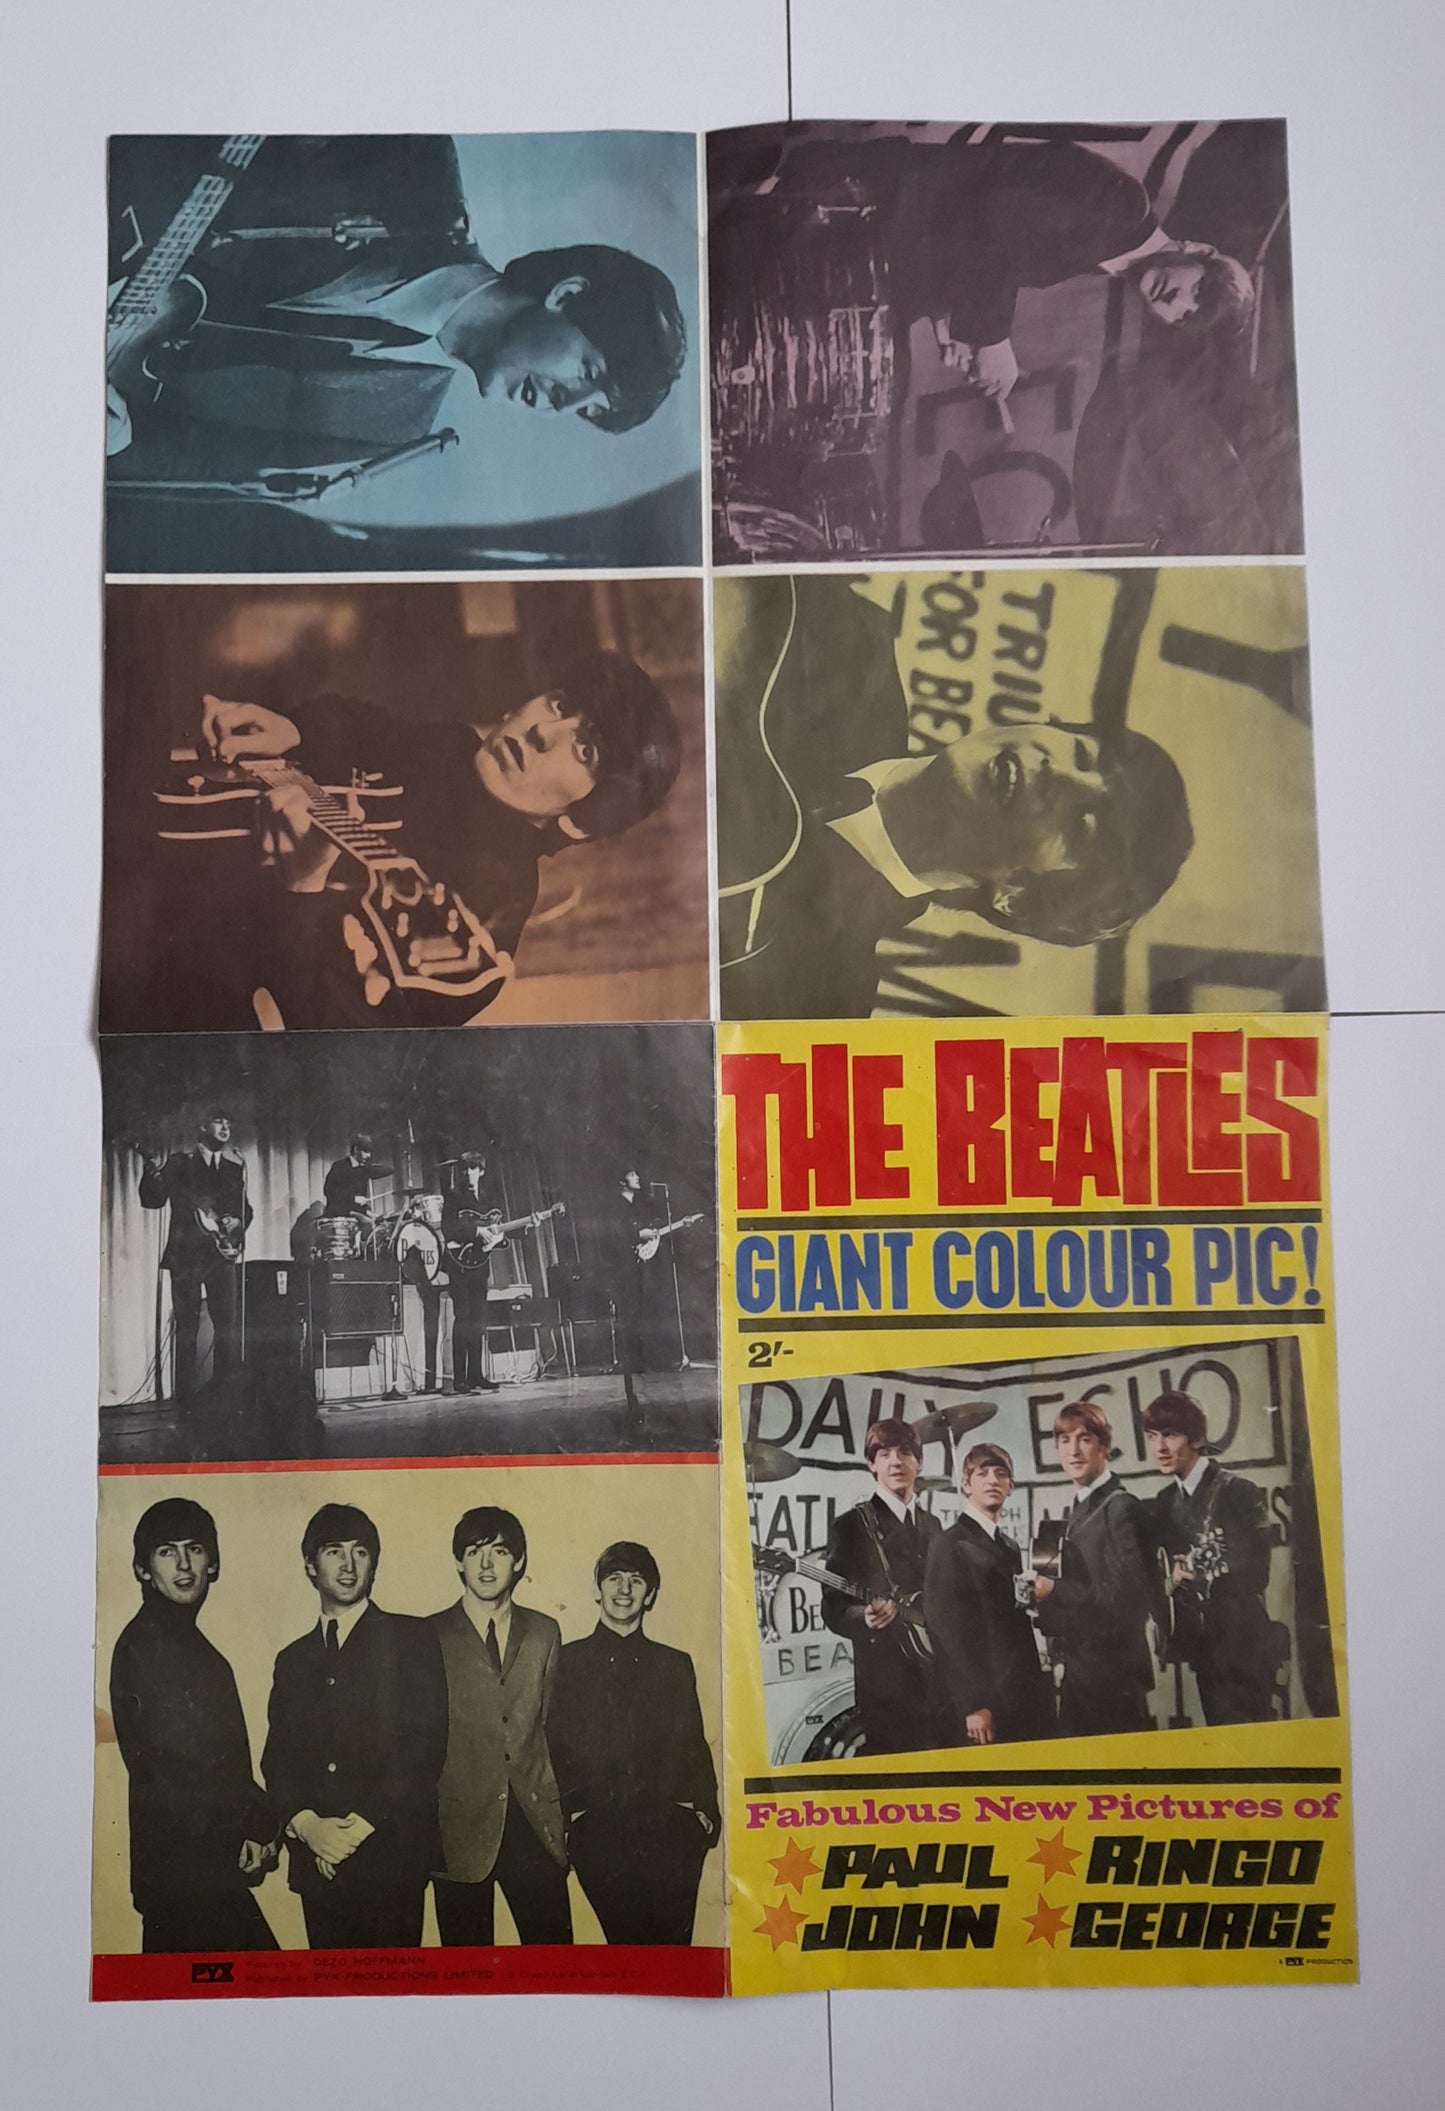 The Beatles original Giant Colour Pic